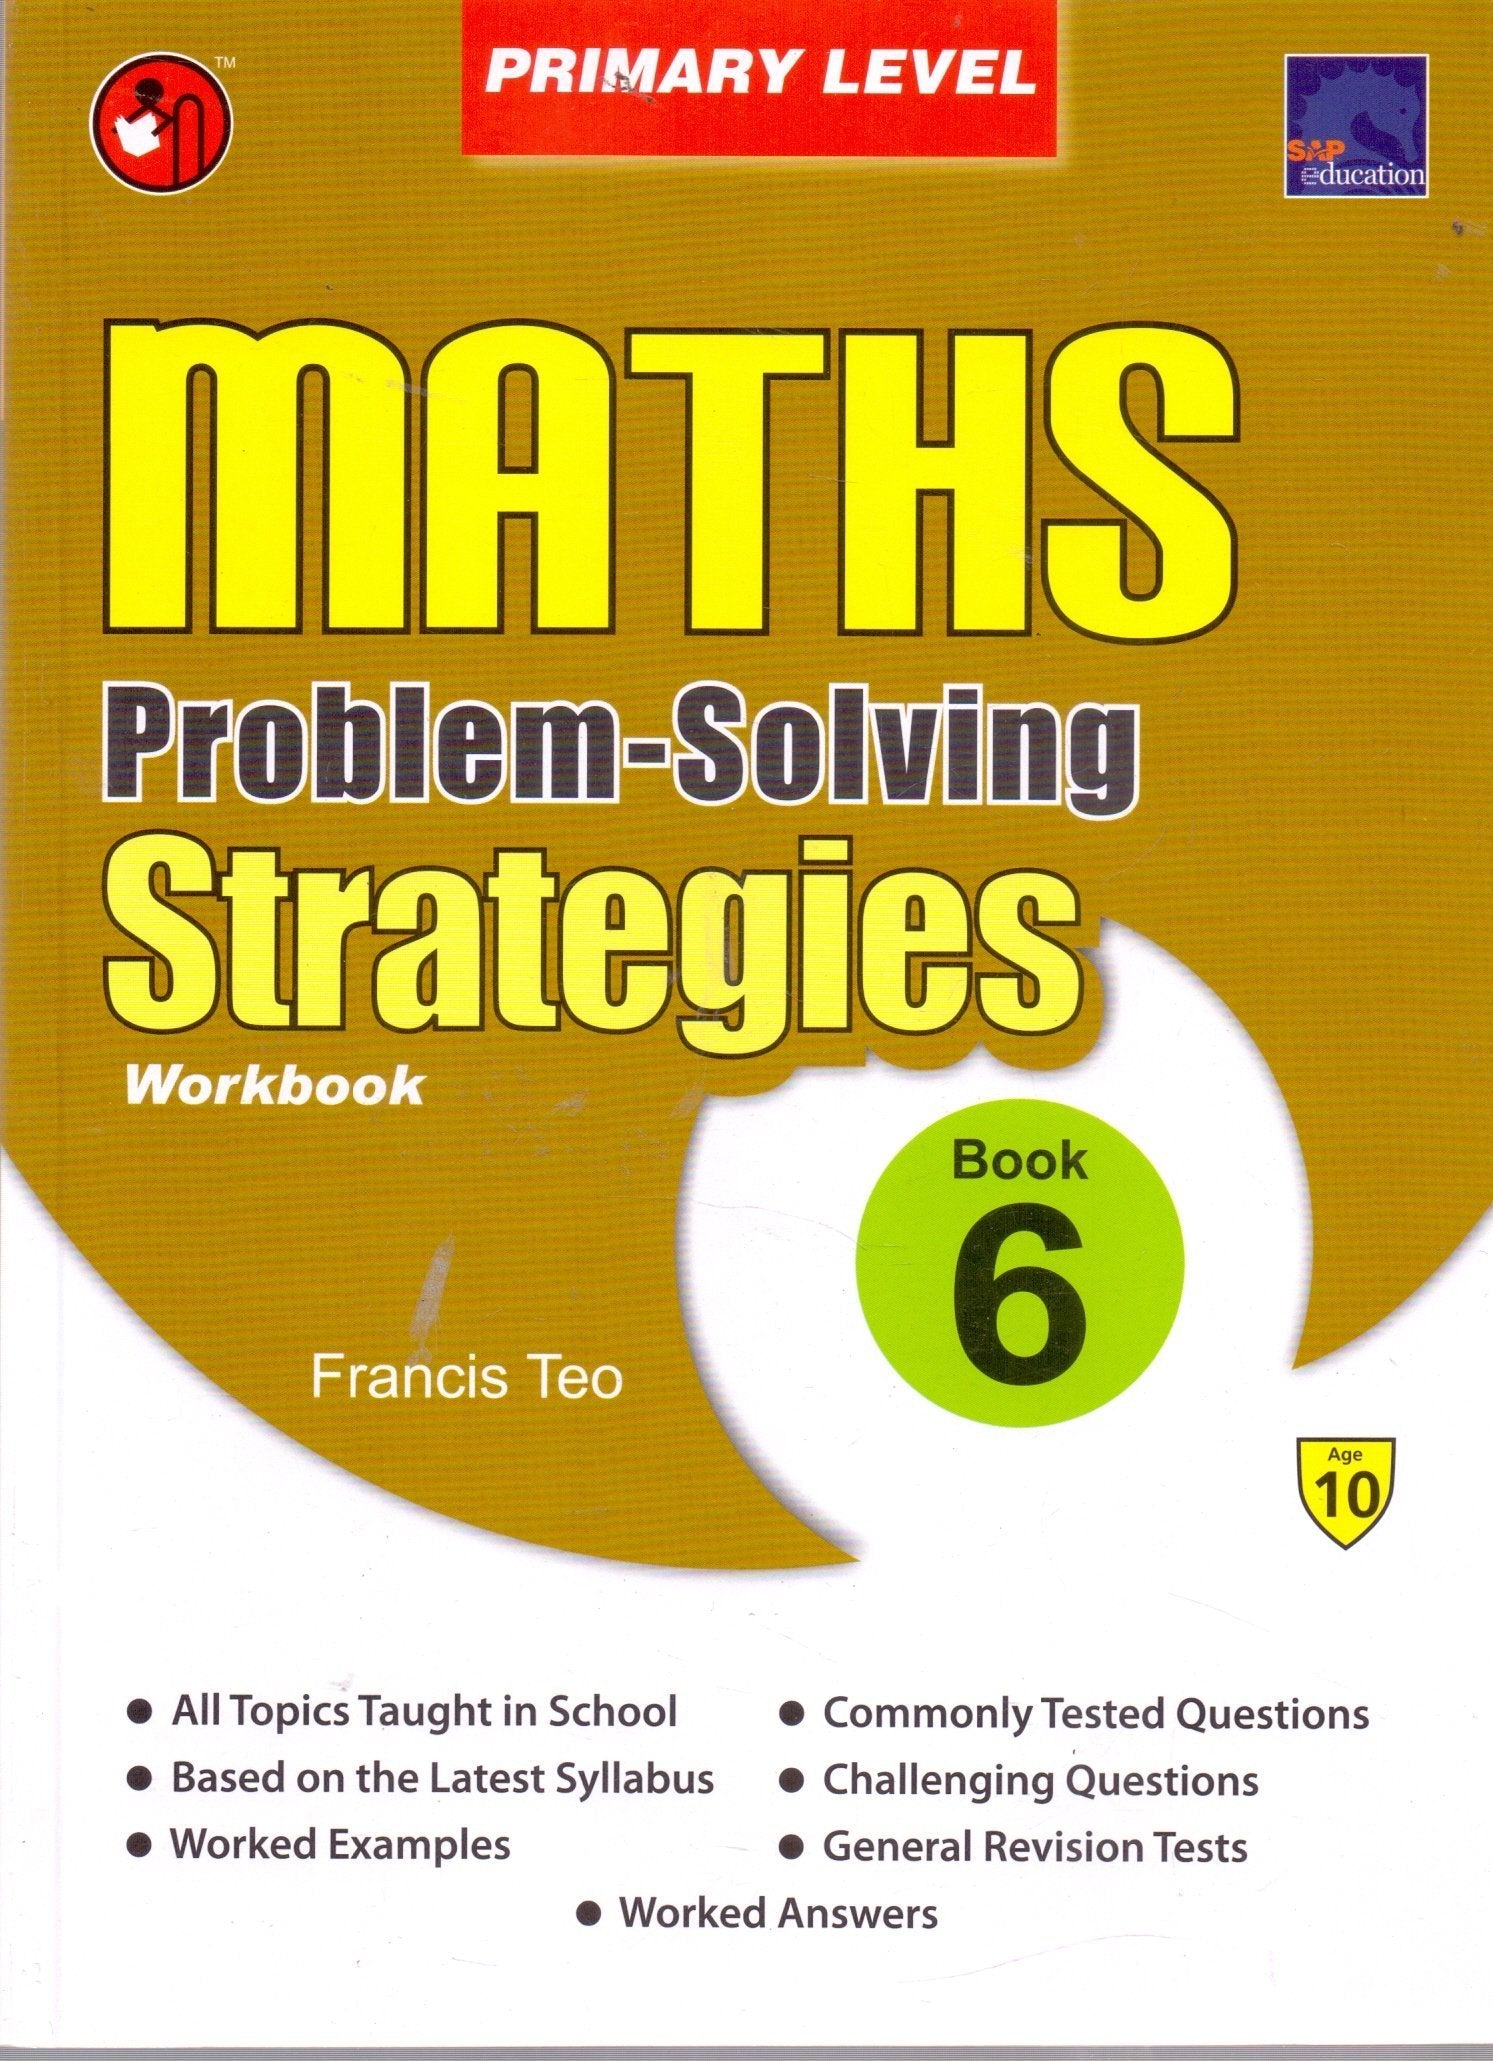 sap math problem solving strategies